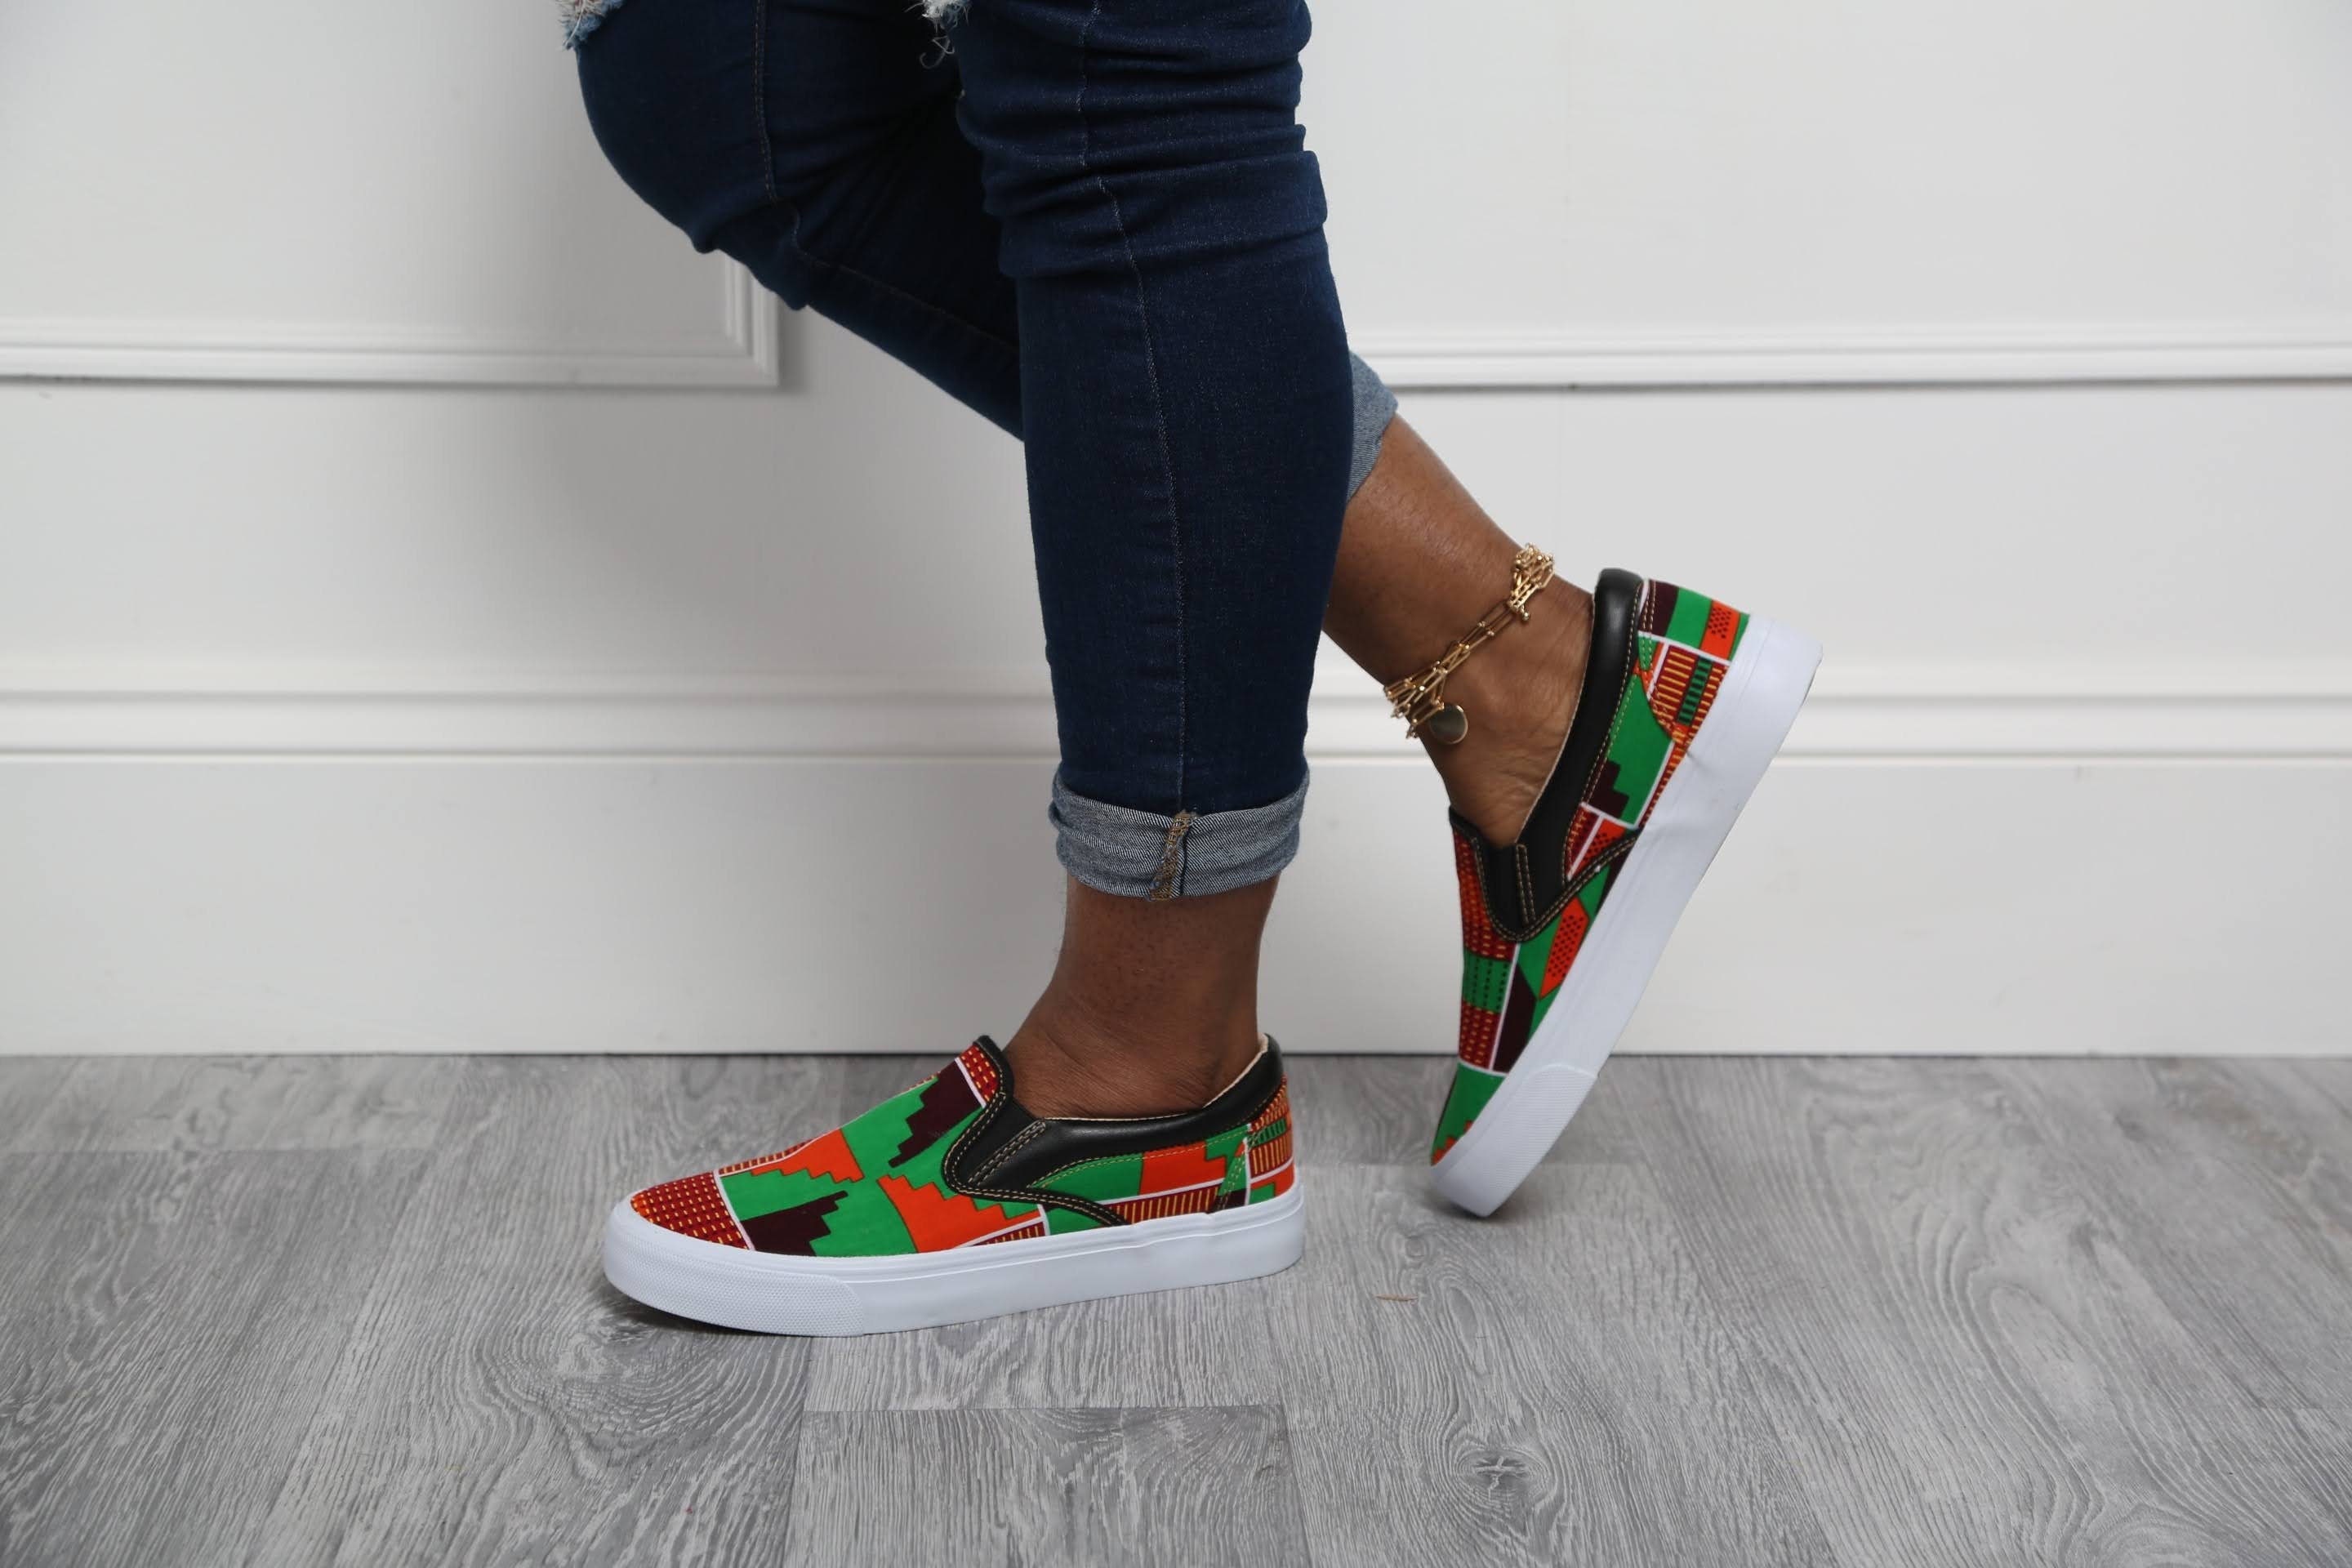 Men's African Print Lightweight Slip-On Sneakers Casual Vans Trainers Ankara Kente Unisex Athletic Fashion Shoes Flats Pumps Orange Kumasi